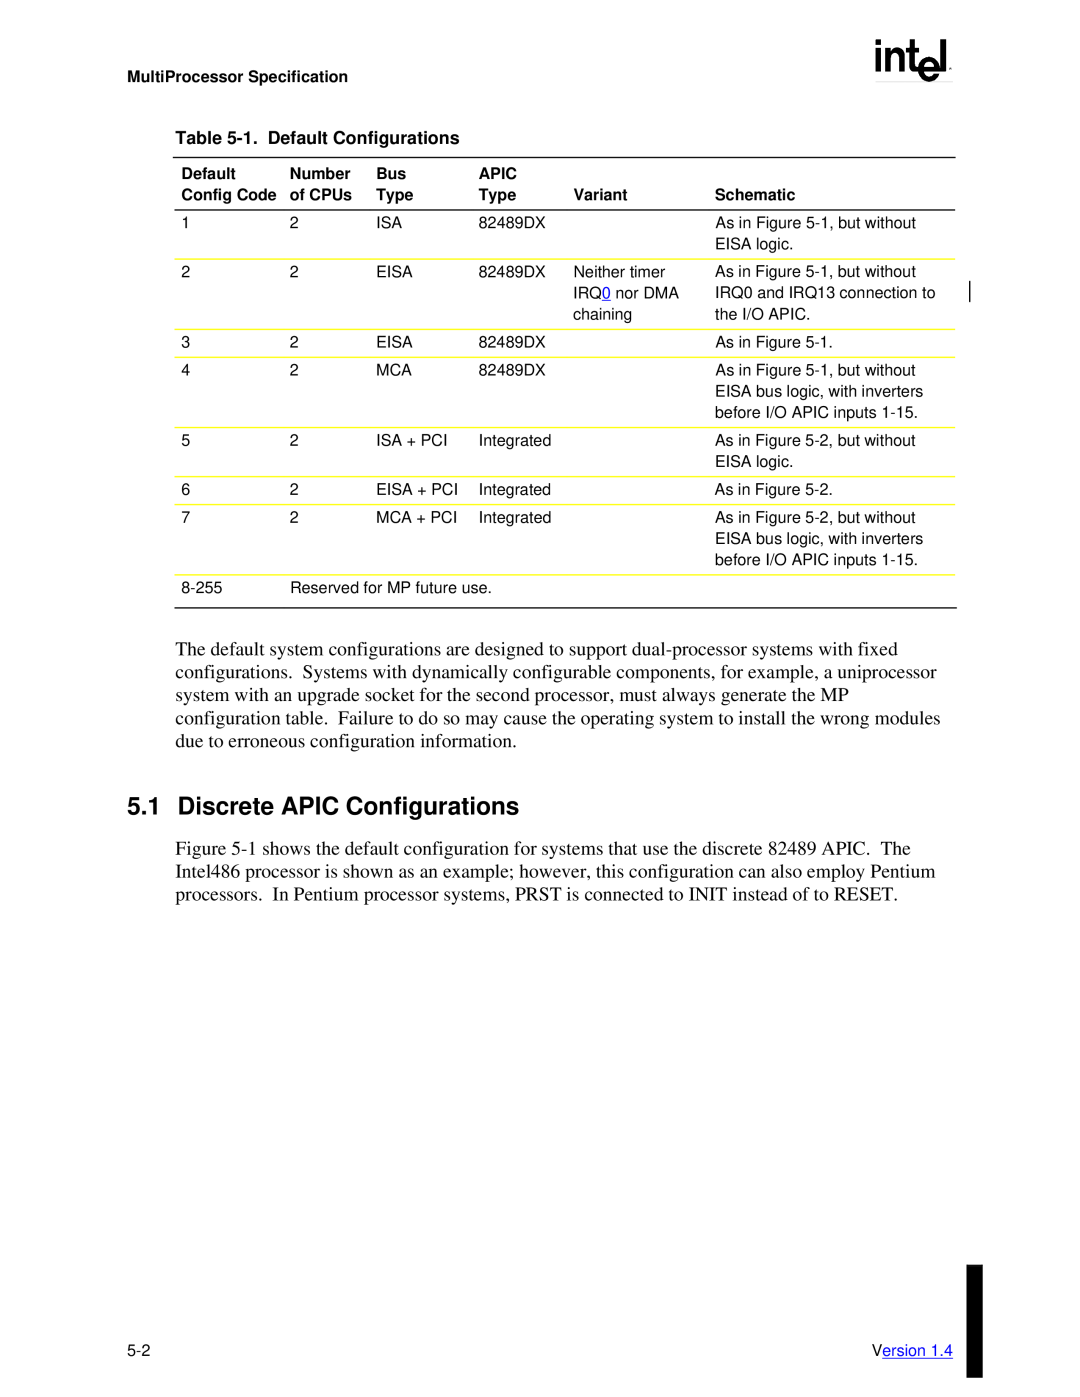 Intel MultiProcessor manual Discrete APIC Configurations, 1.Default Configurations 